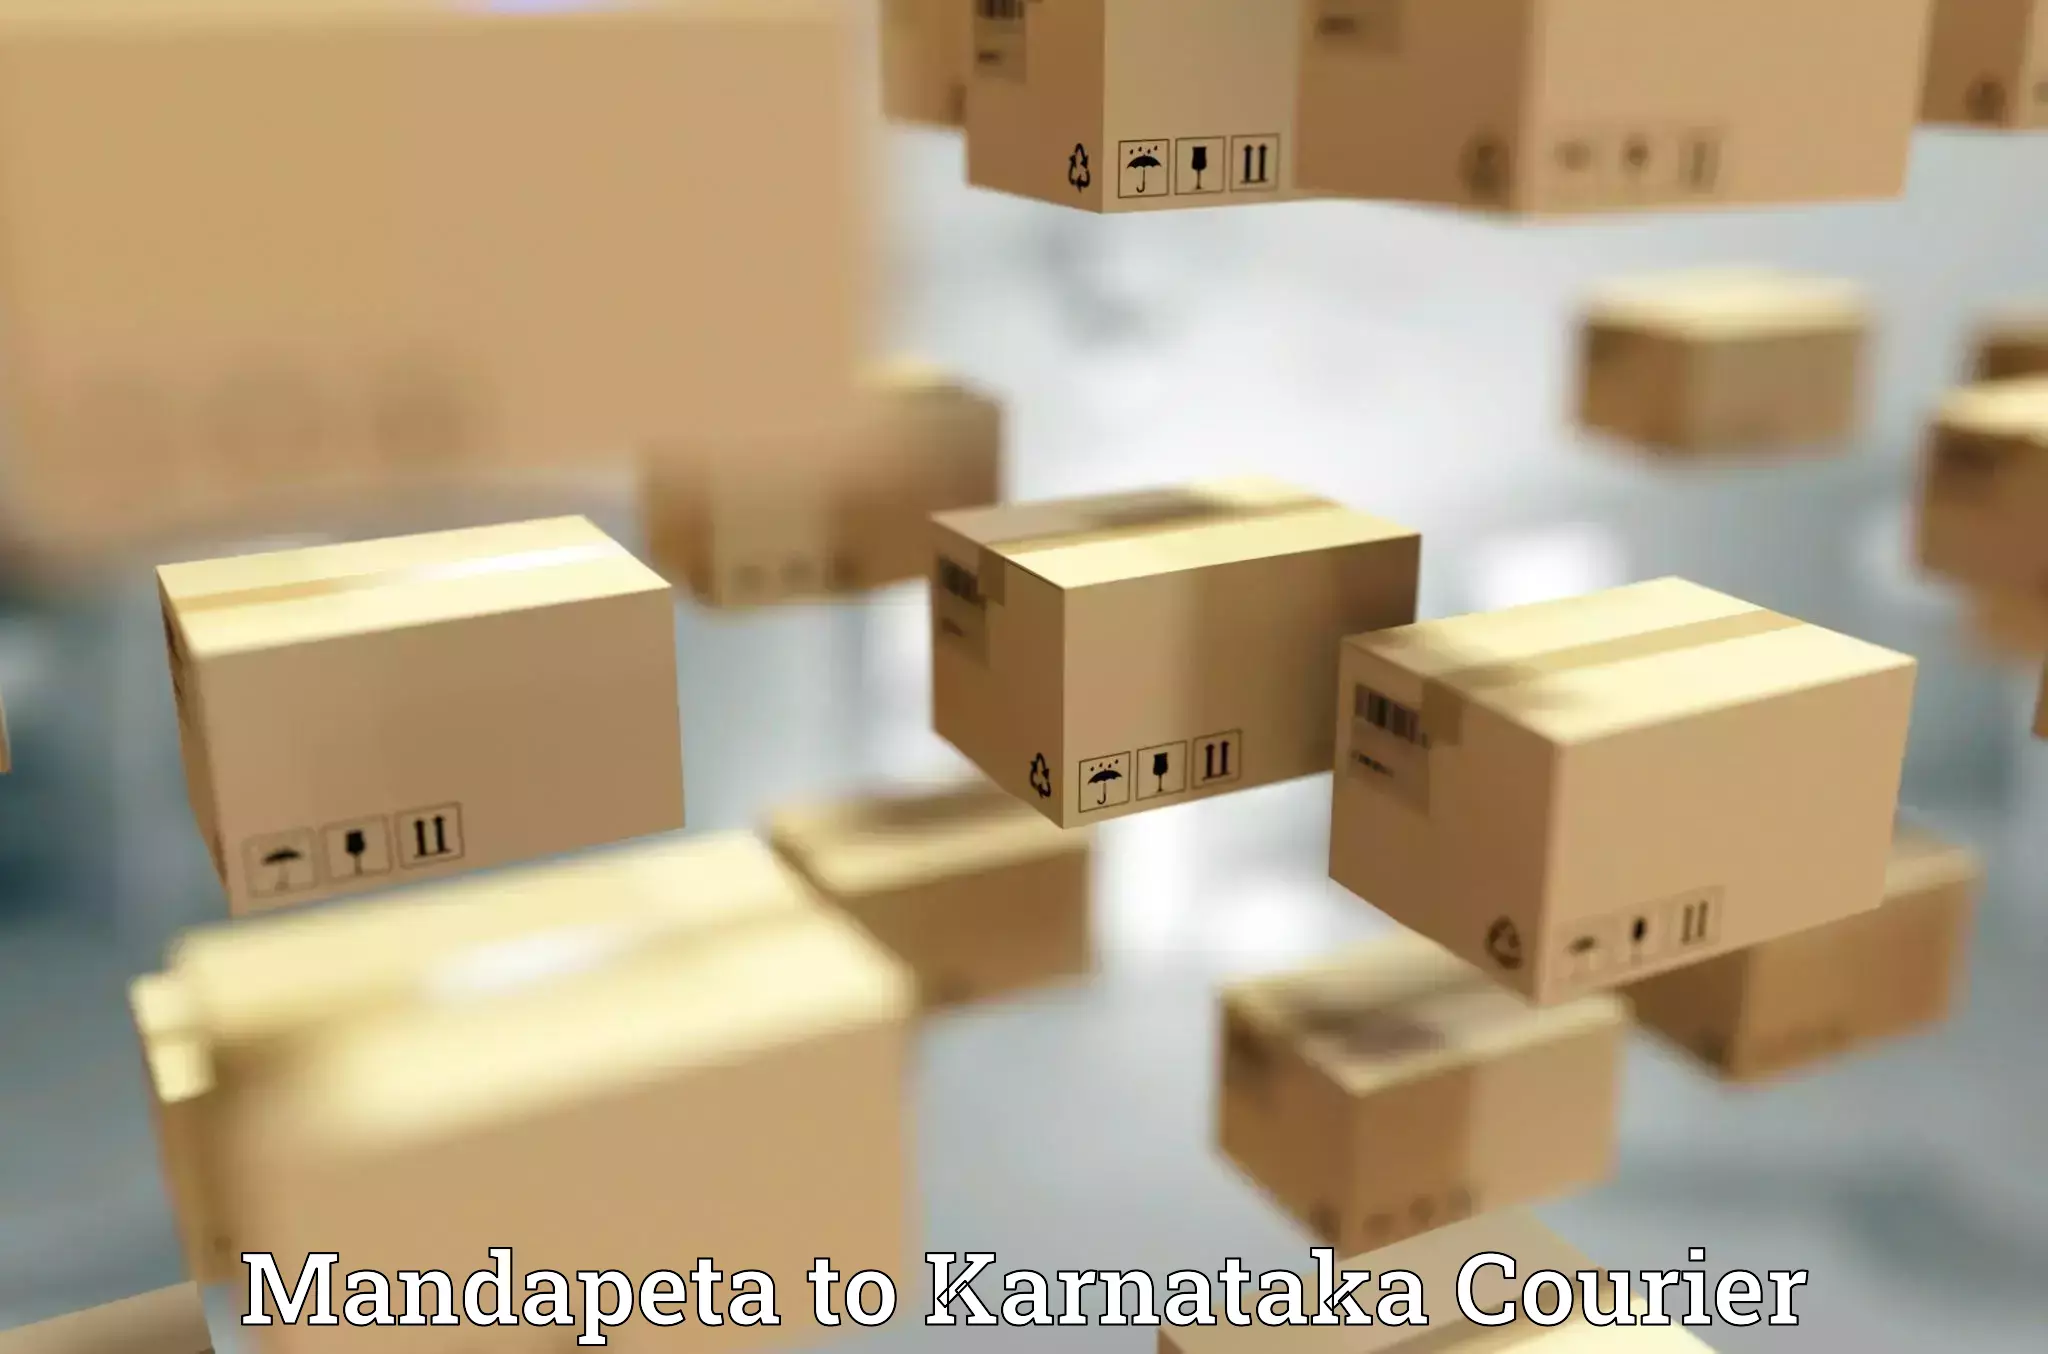 Tech-enabled shipping Mandapeta to Karnataka